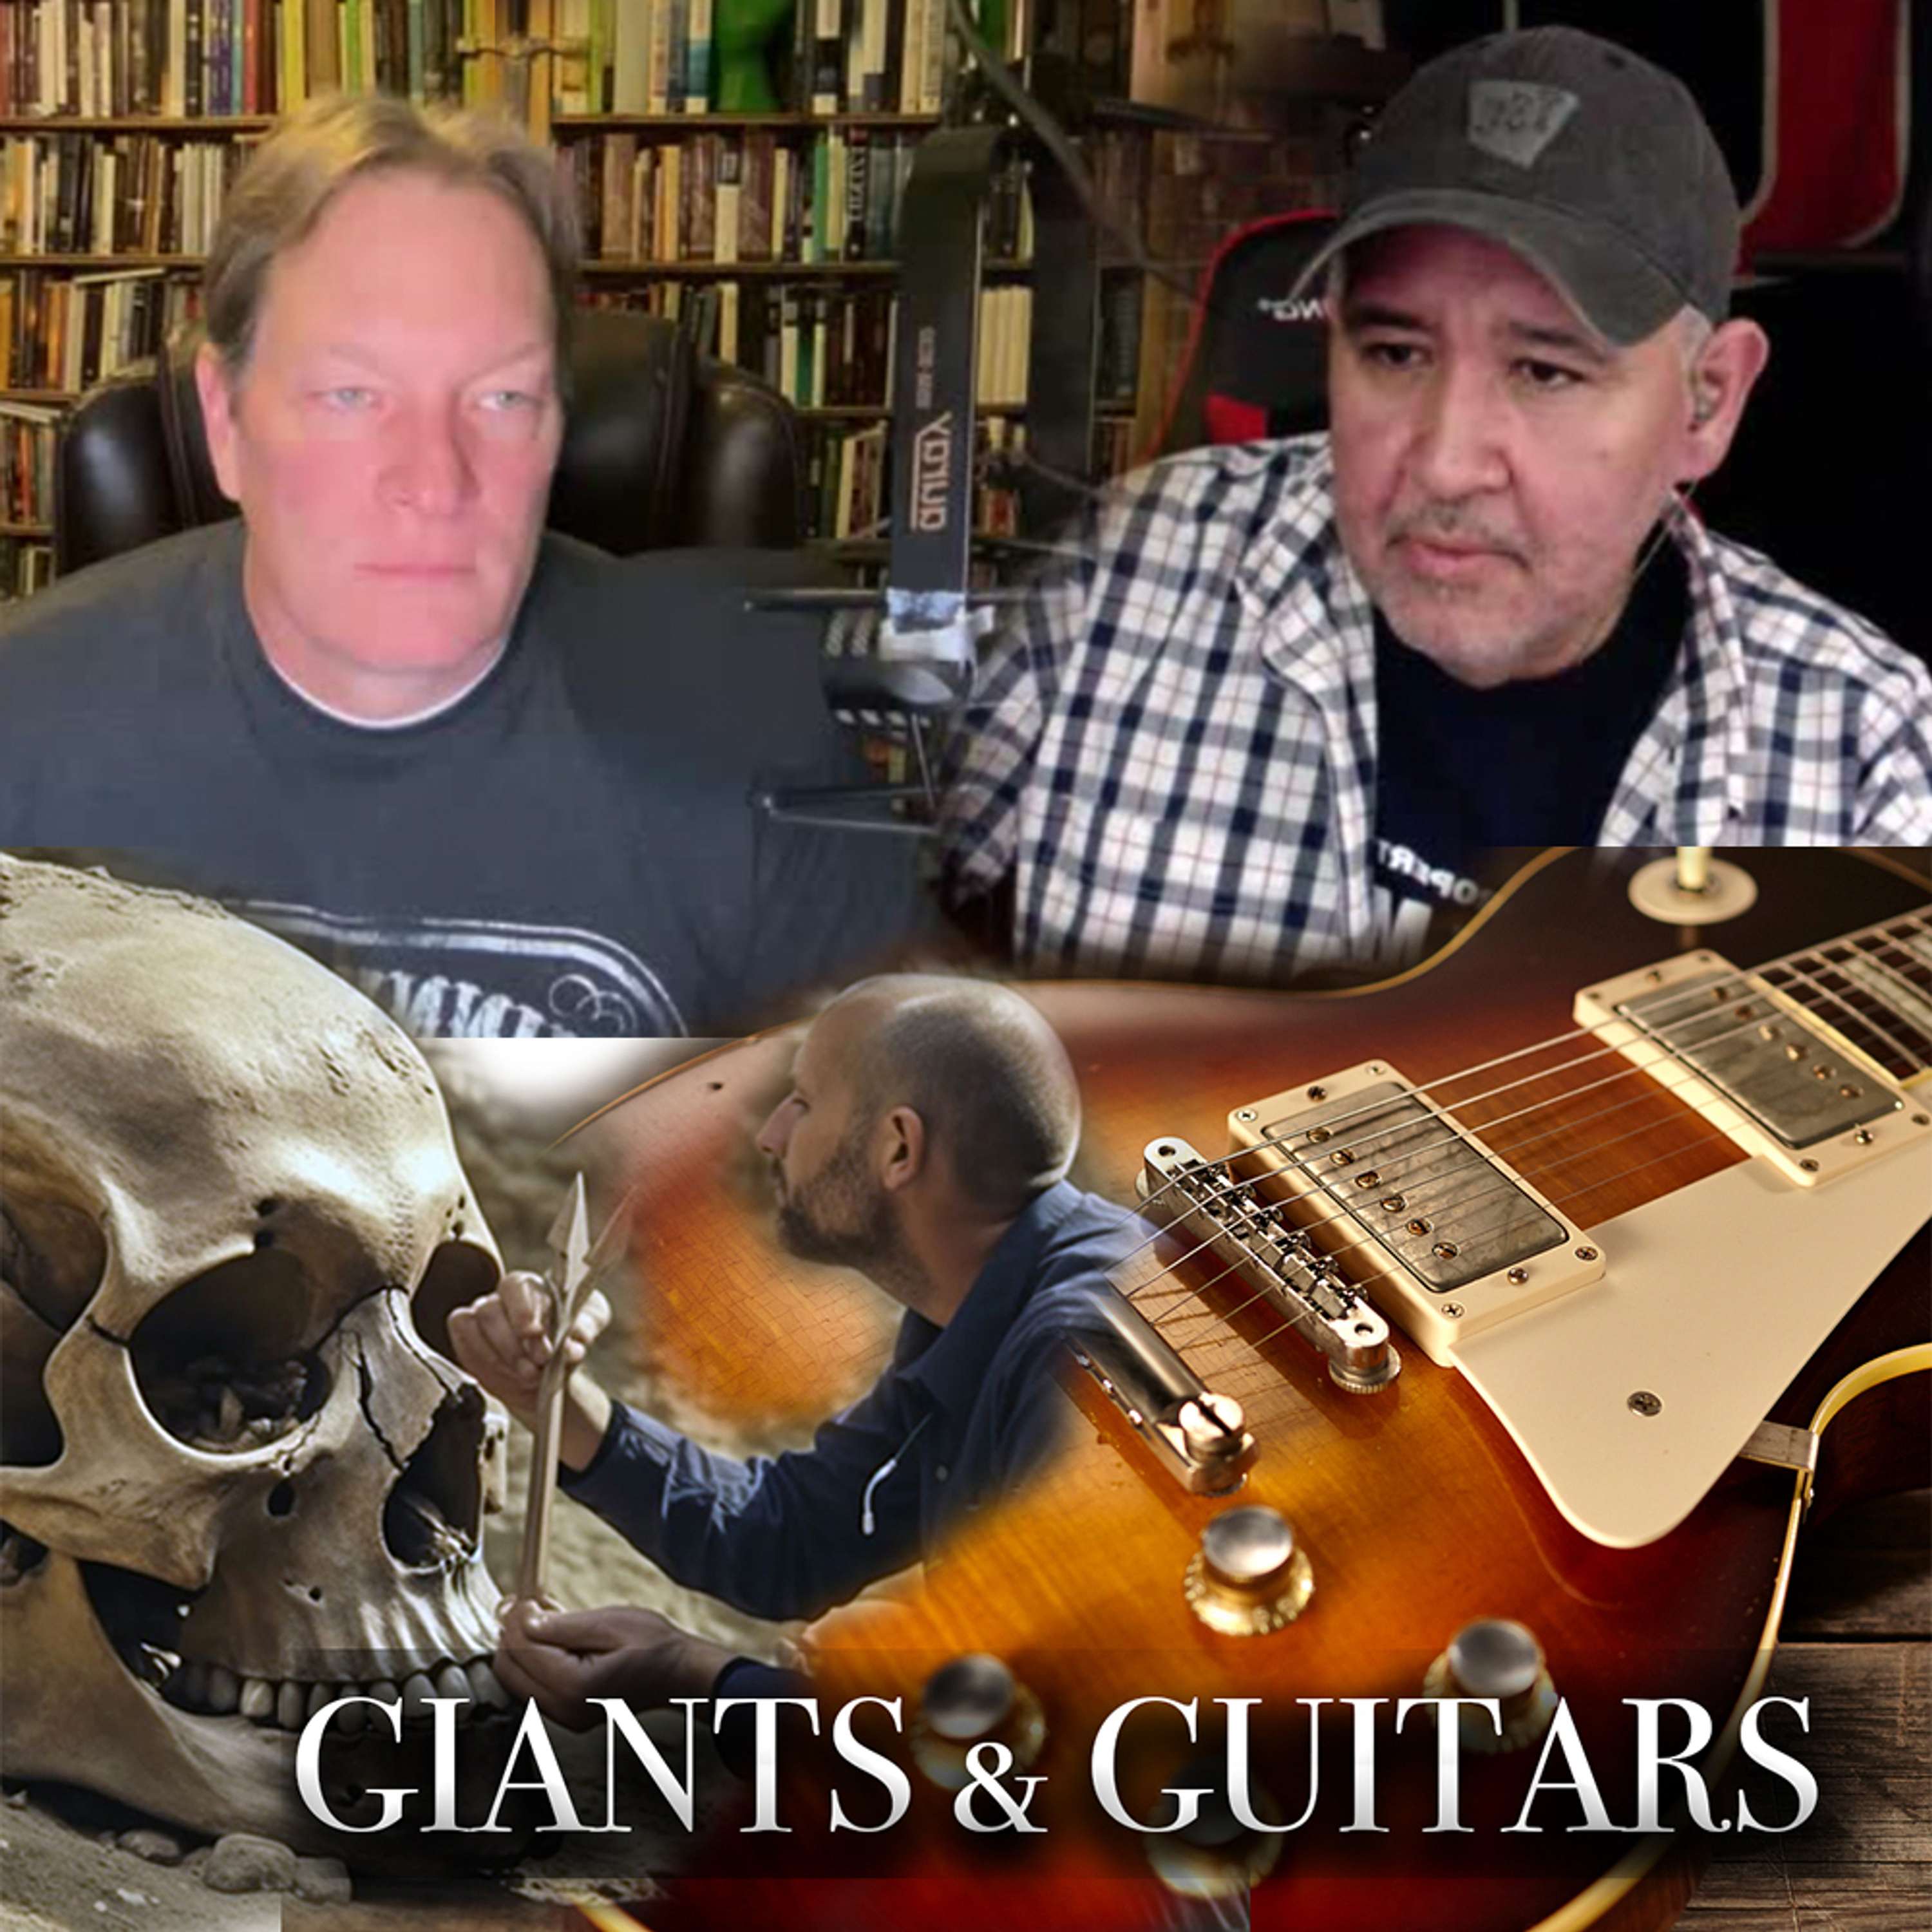 EP 9- Giant Guitars- Doug and Rudy host Judd Burton (for a bit), Kenny Seay, and Joe Horn